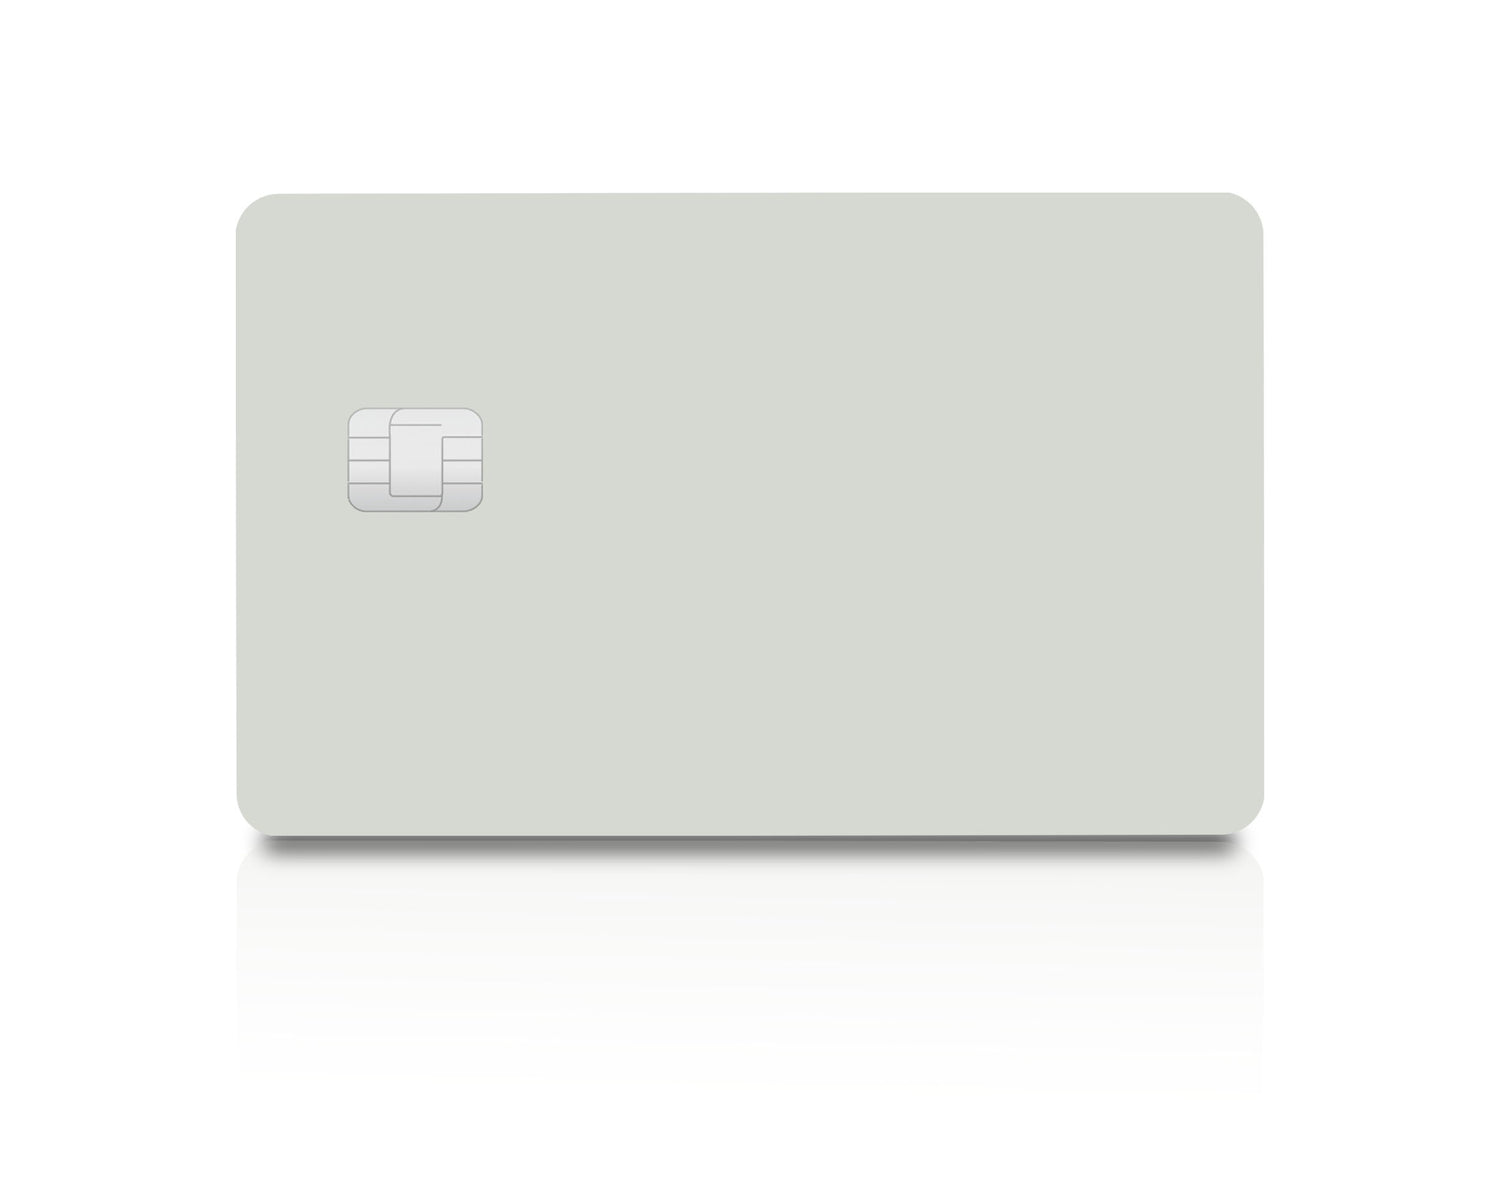 Flex Designs Credit Card Off Grey Full Skins - Pattern  & Debit Card Skin